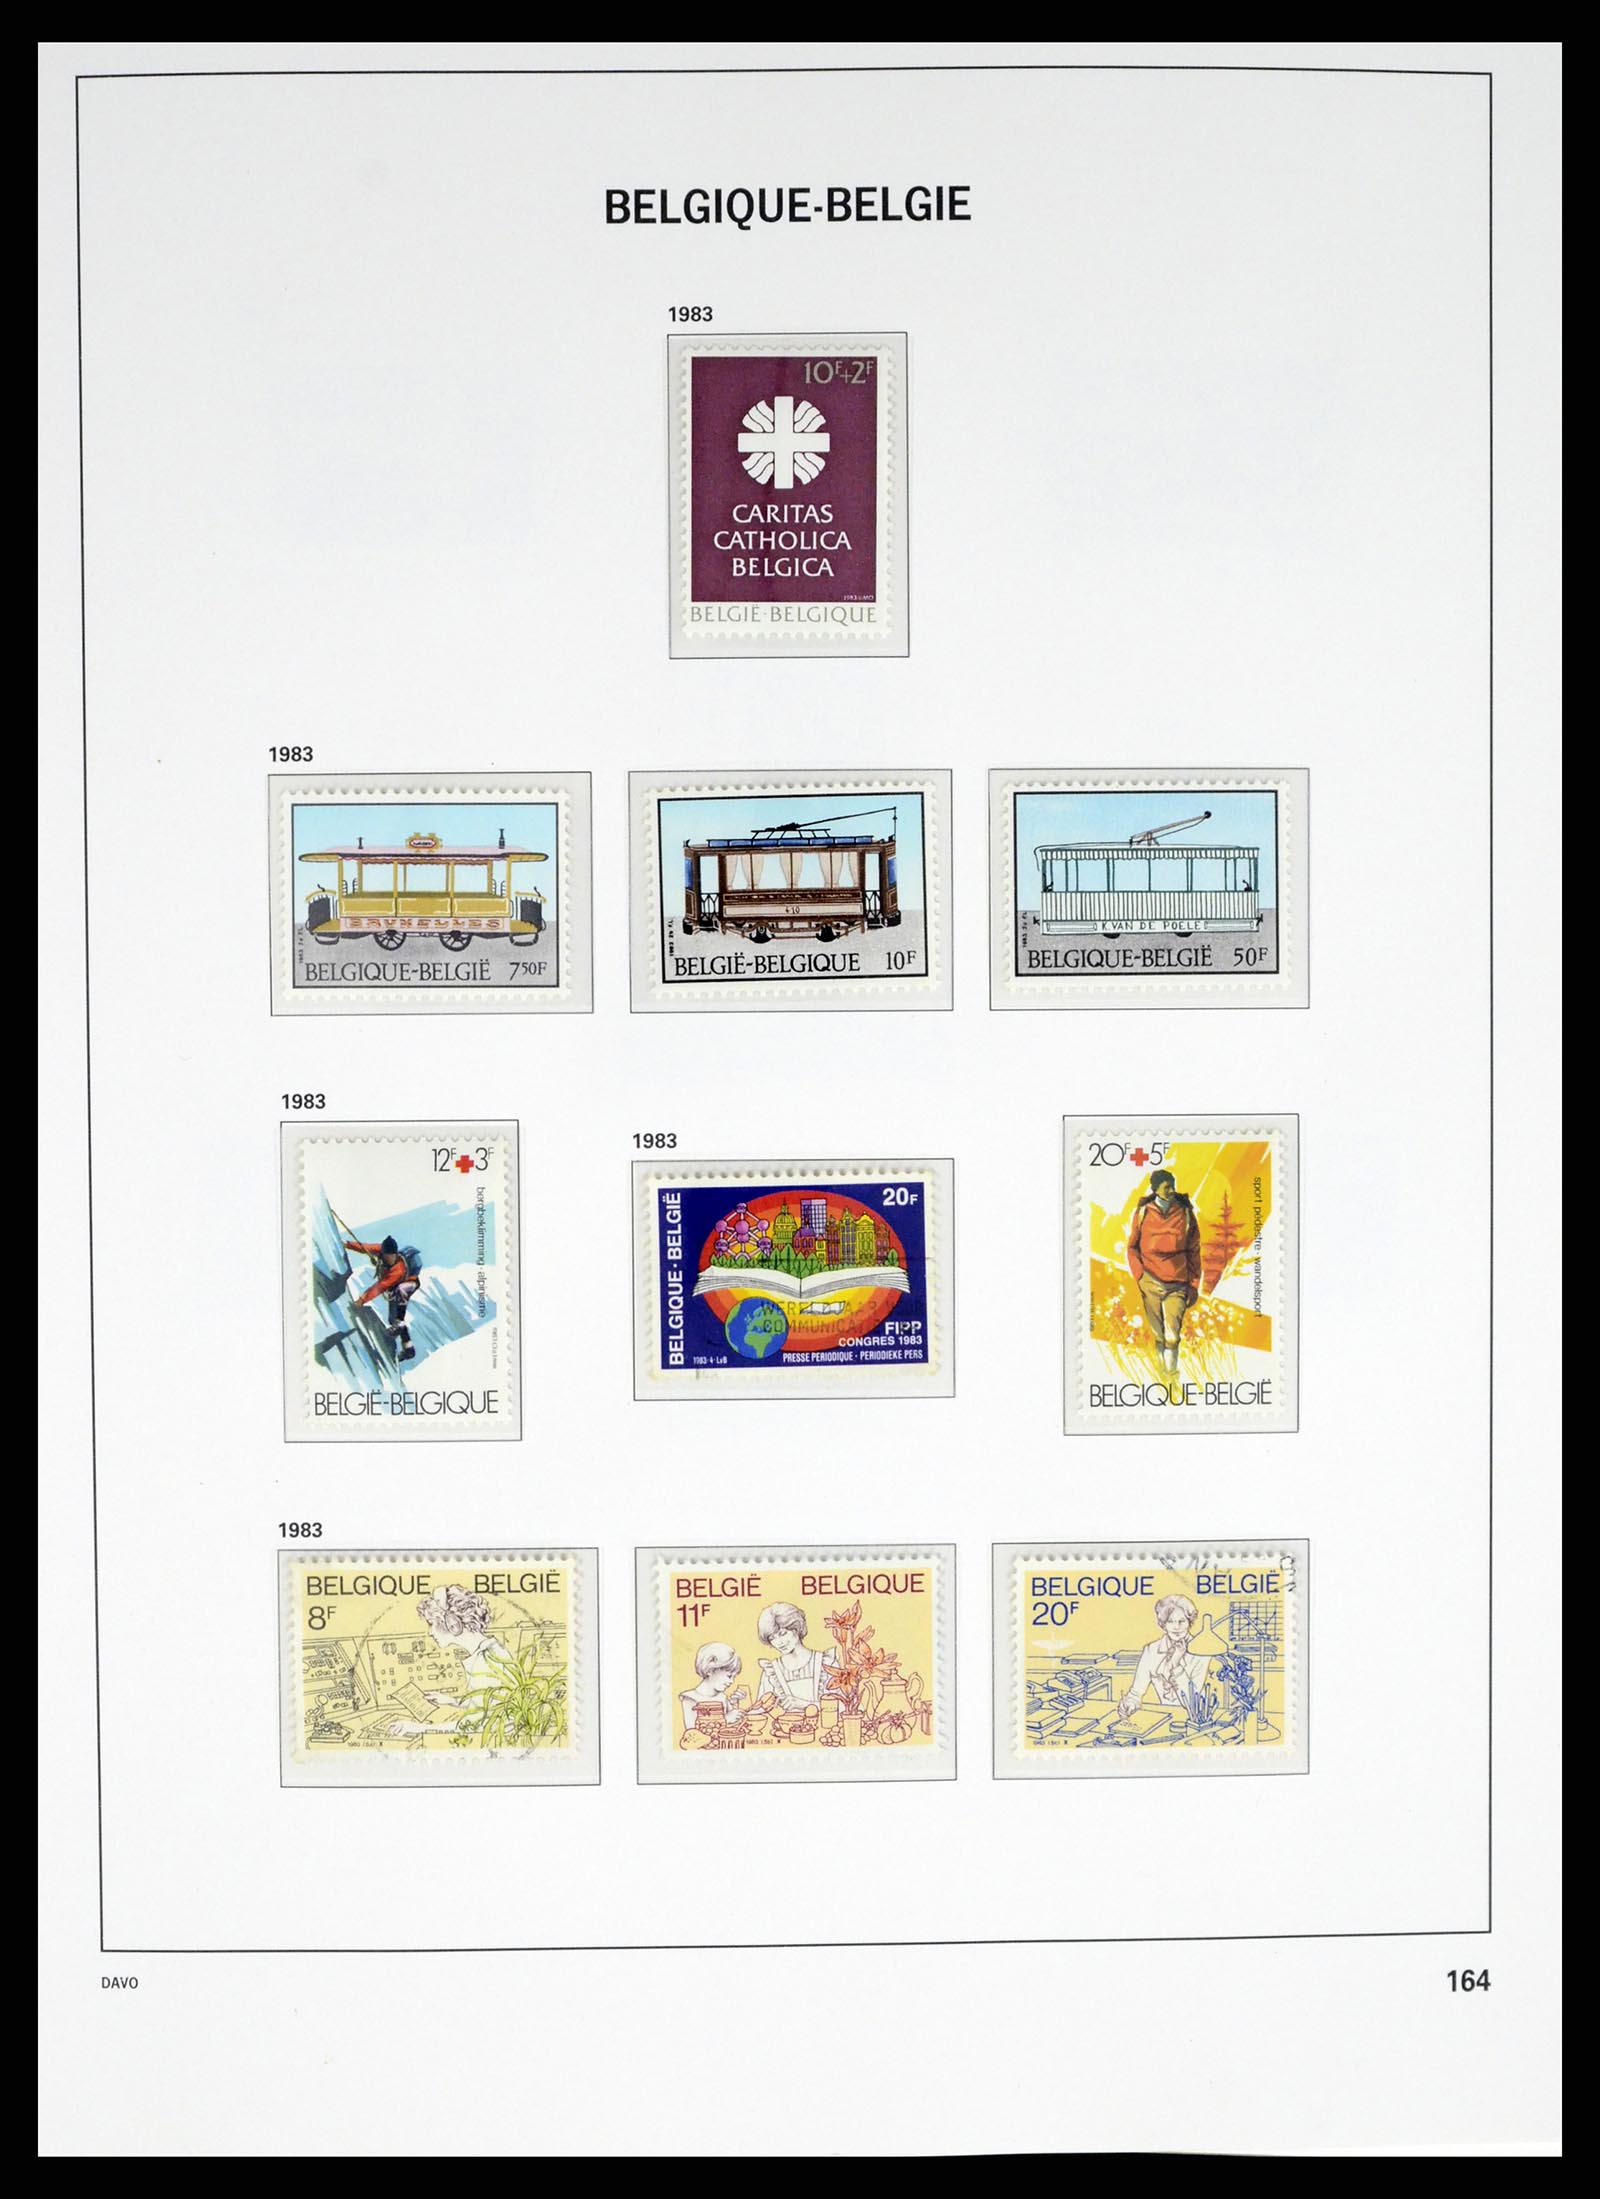 37368 053 - Stamp collection 37368 Belgium 1969-2003.